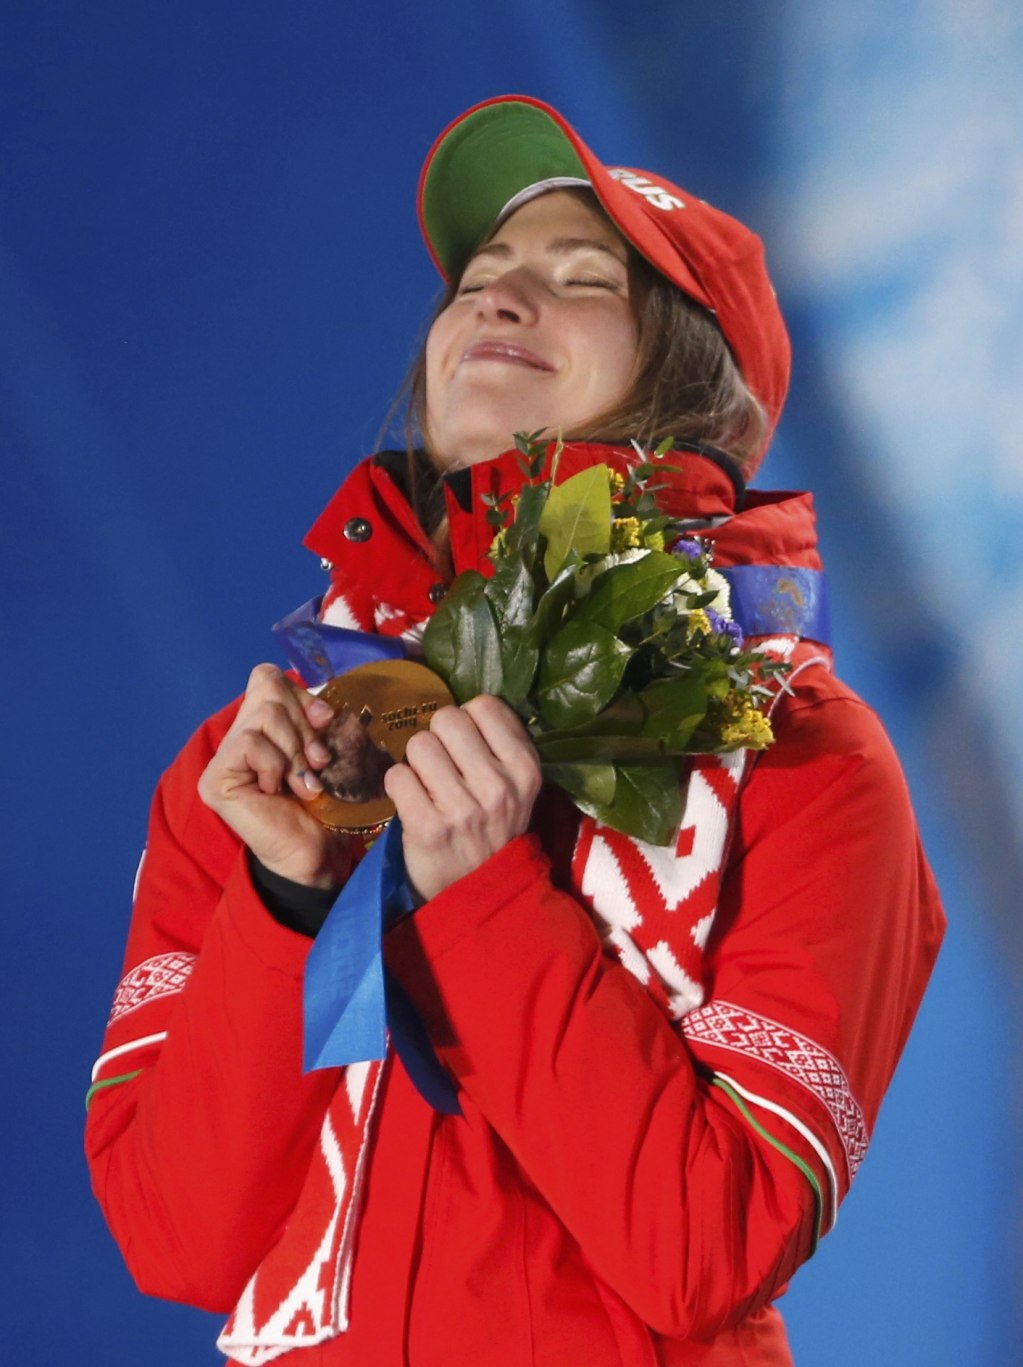 Medal ceremony for women's biathlon 12.5 km mass start event фото (photo)